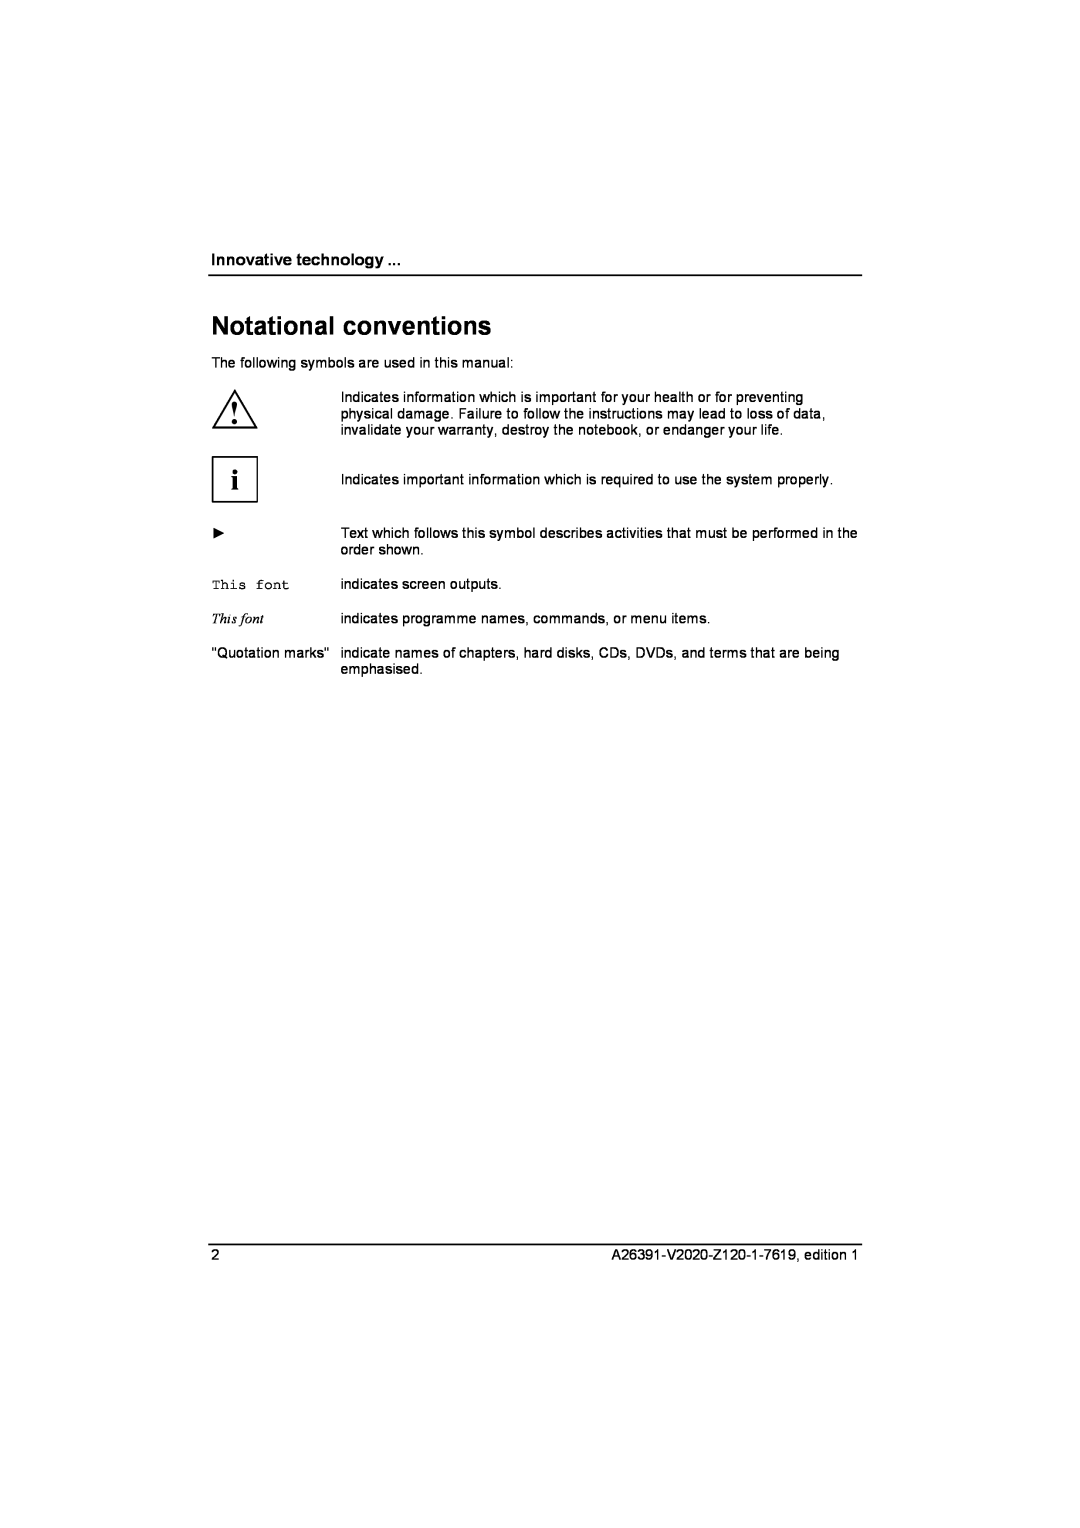 Fujitsu Siemens Computers V2020 manual Notational conventions, Innovative technology, This font 